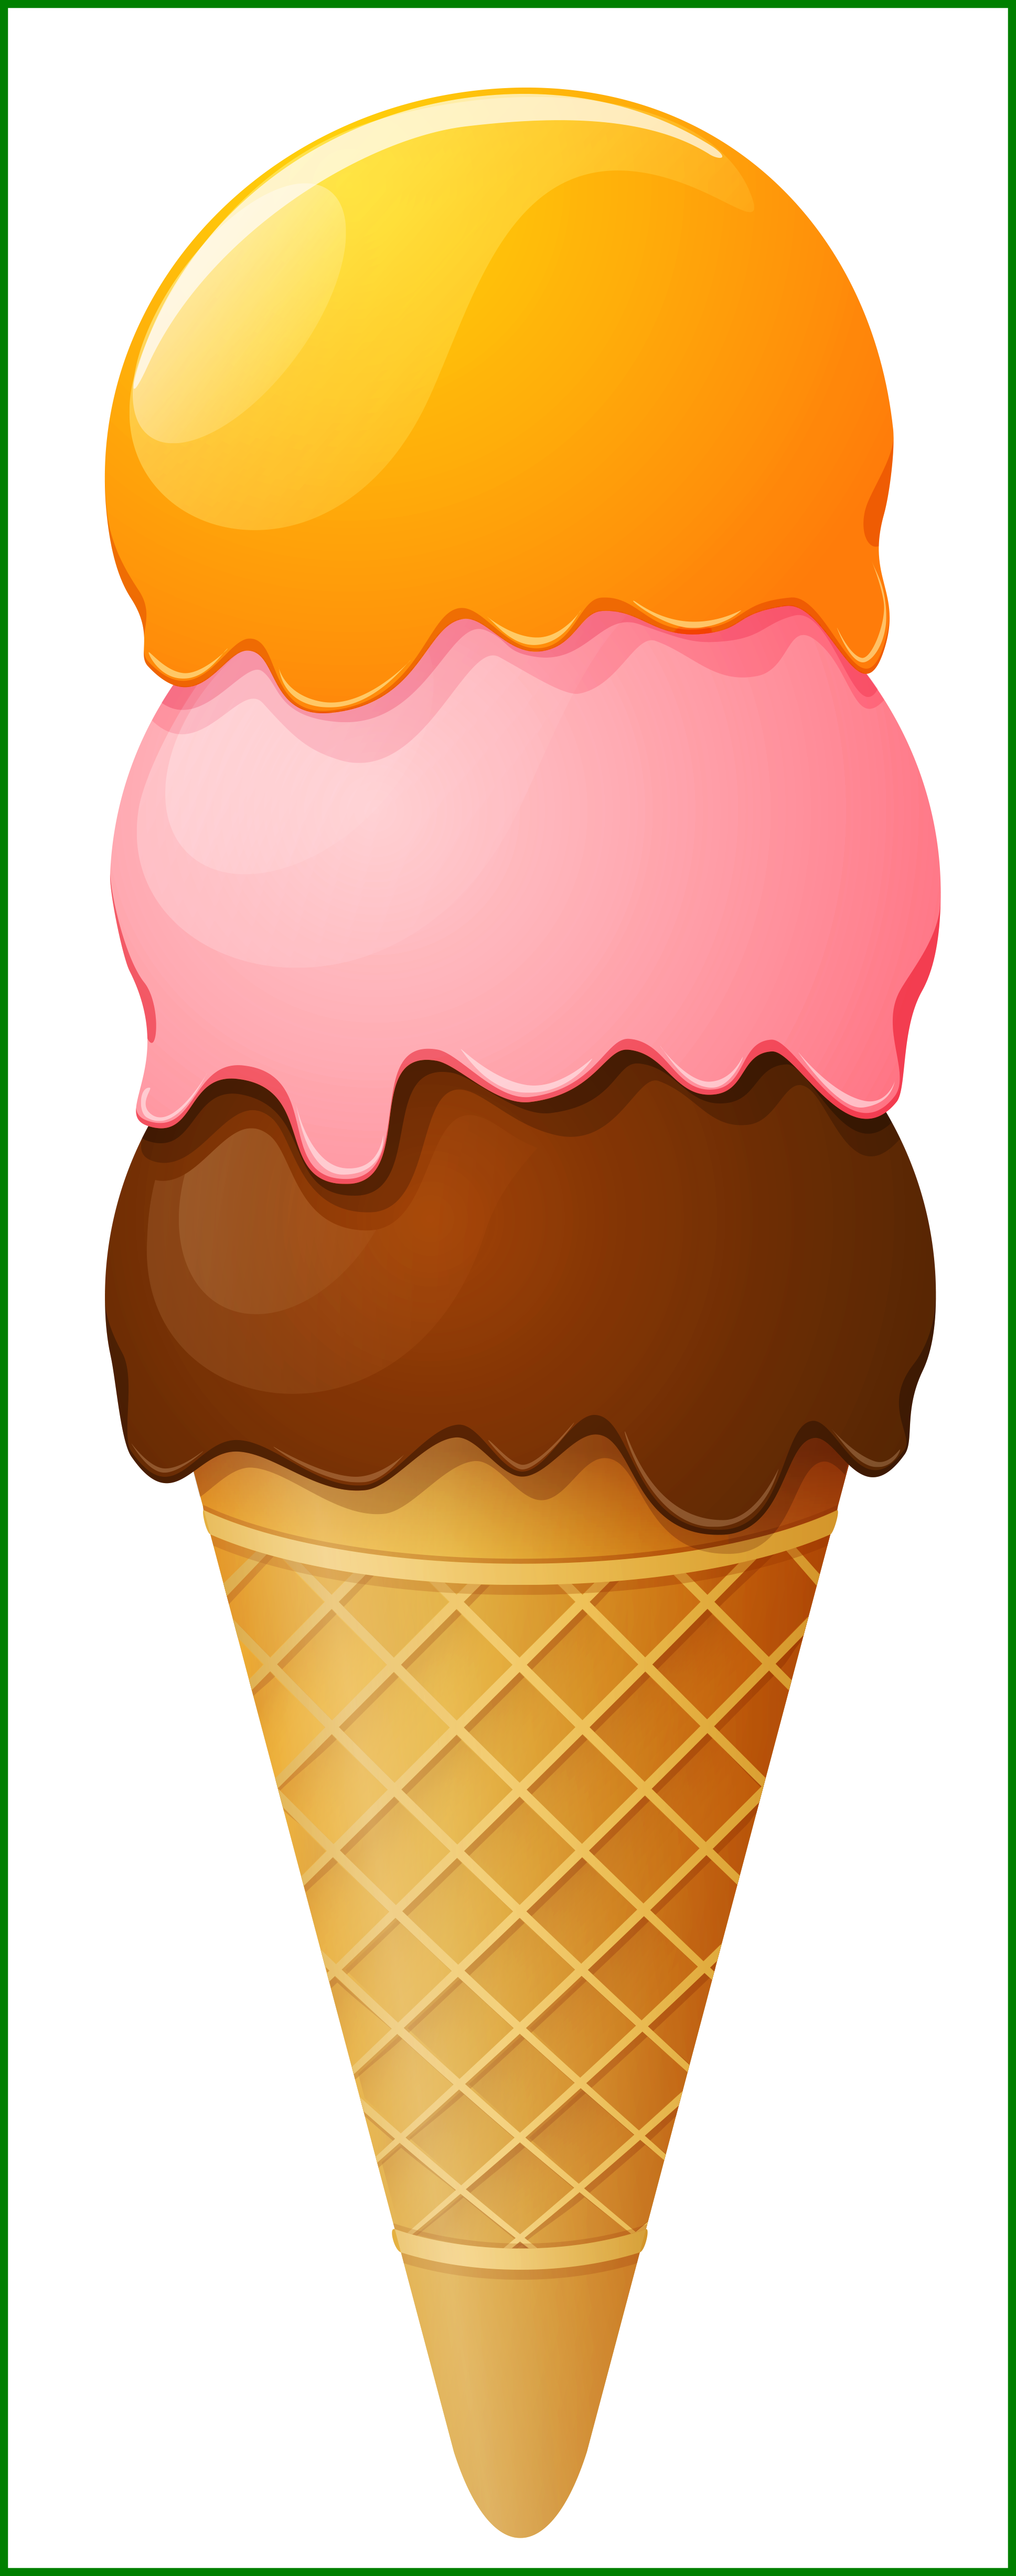 icecream clipart dessert